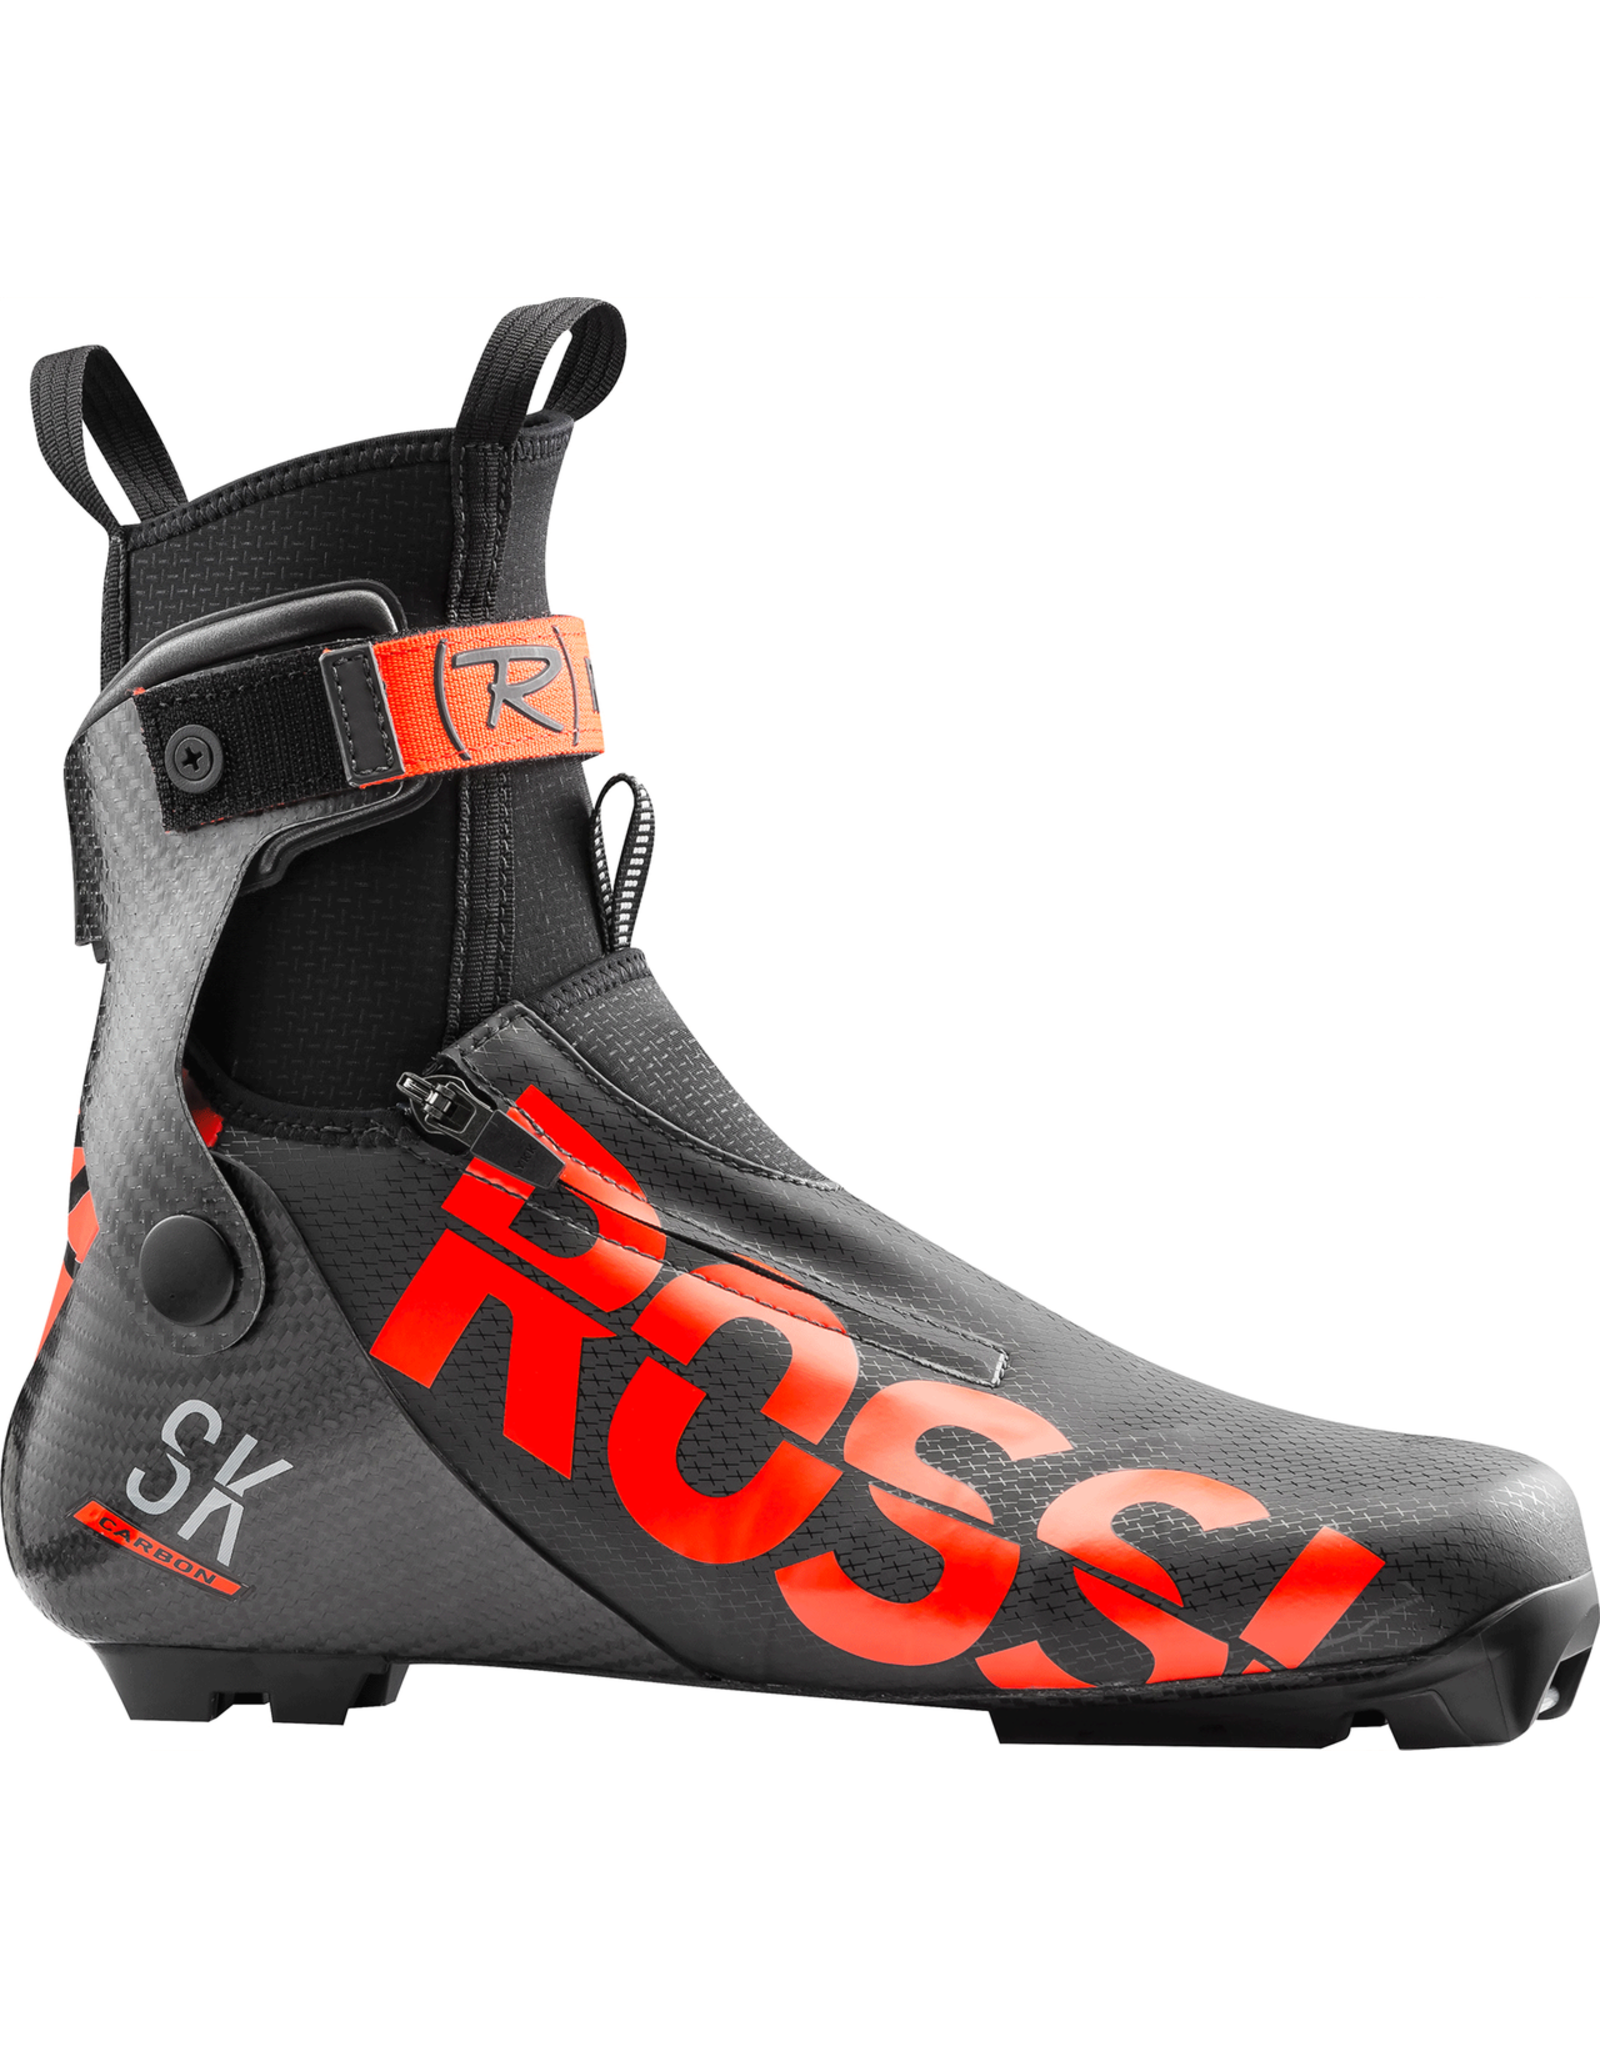 rossignol energy ski boots